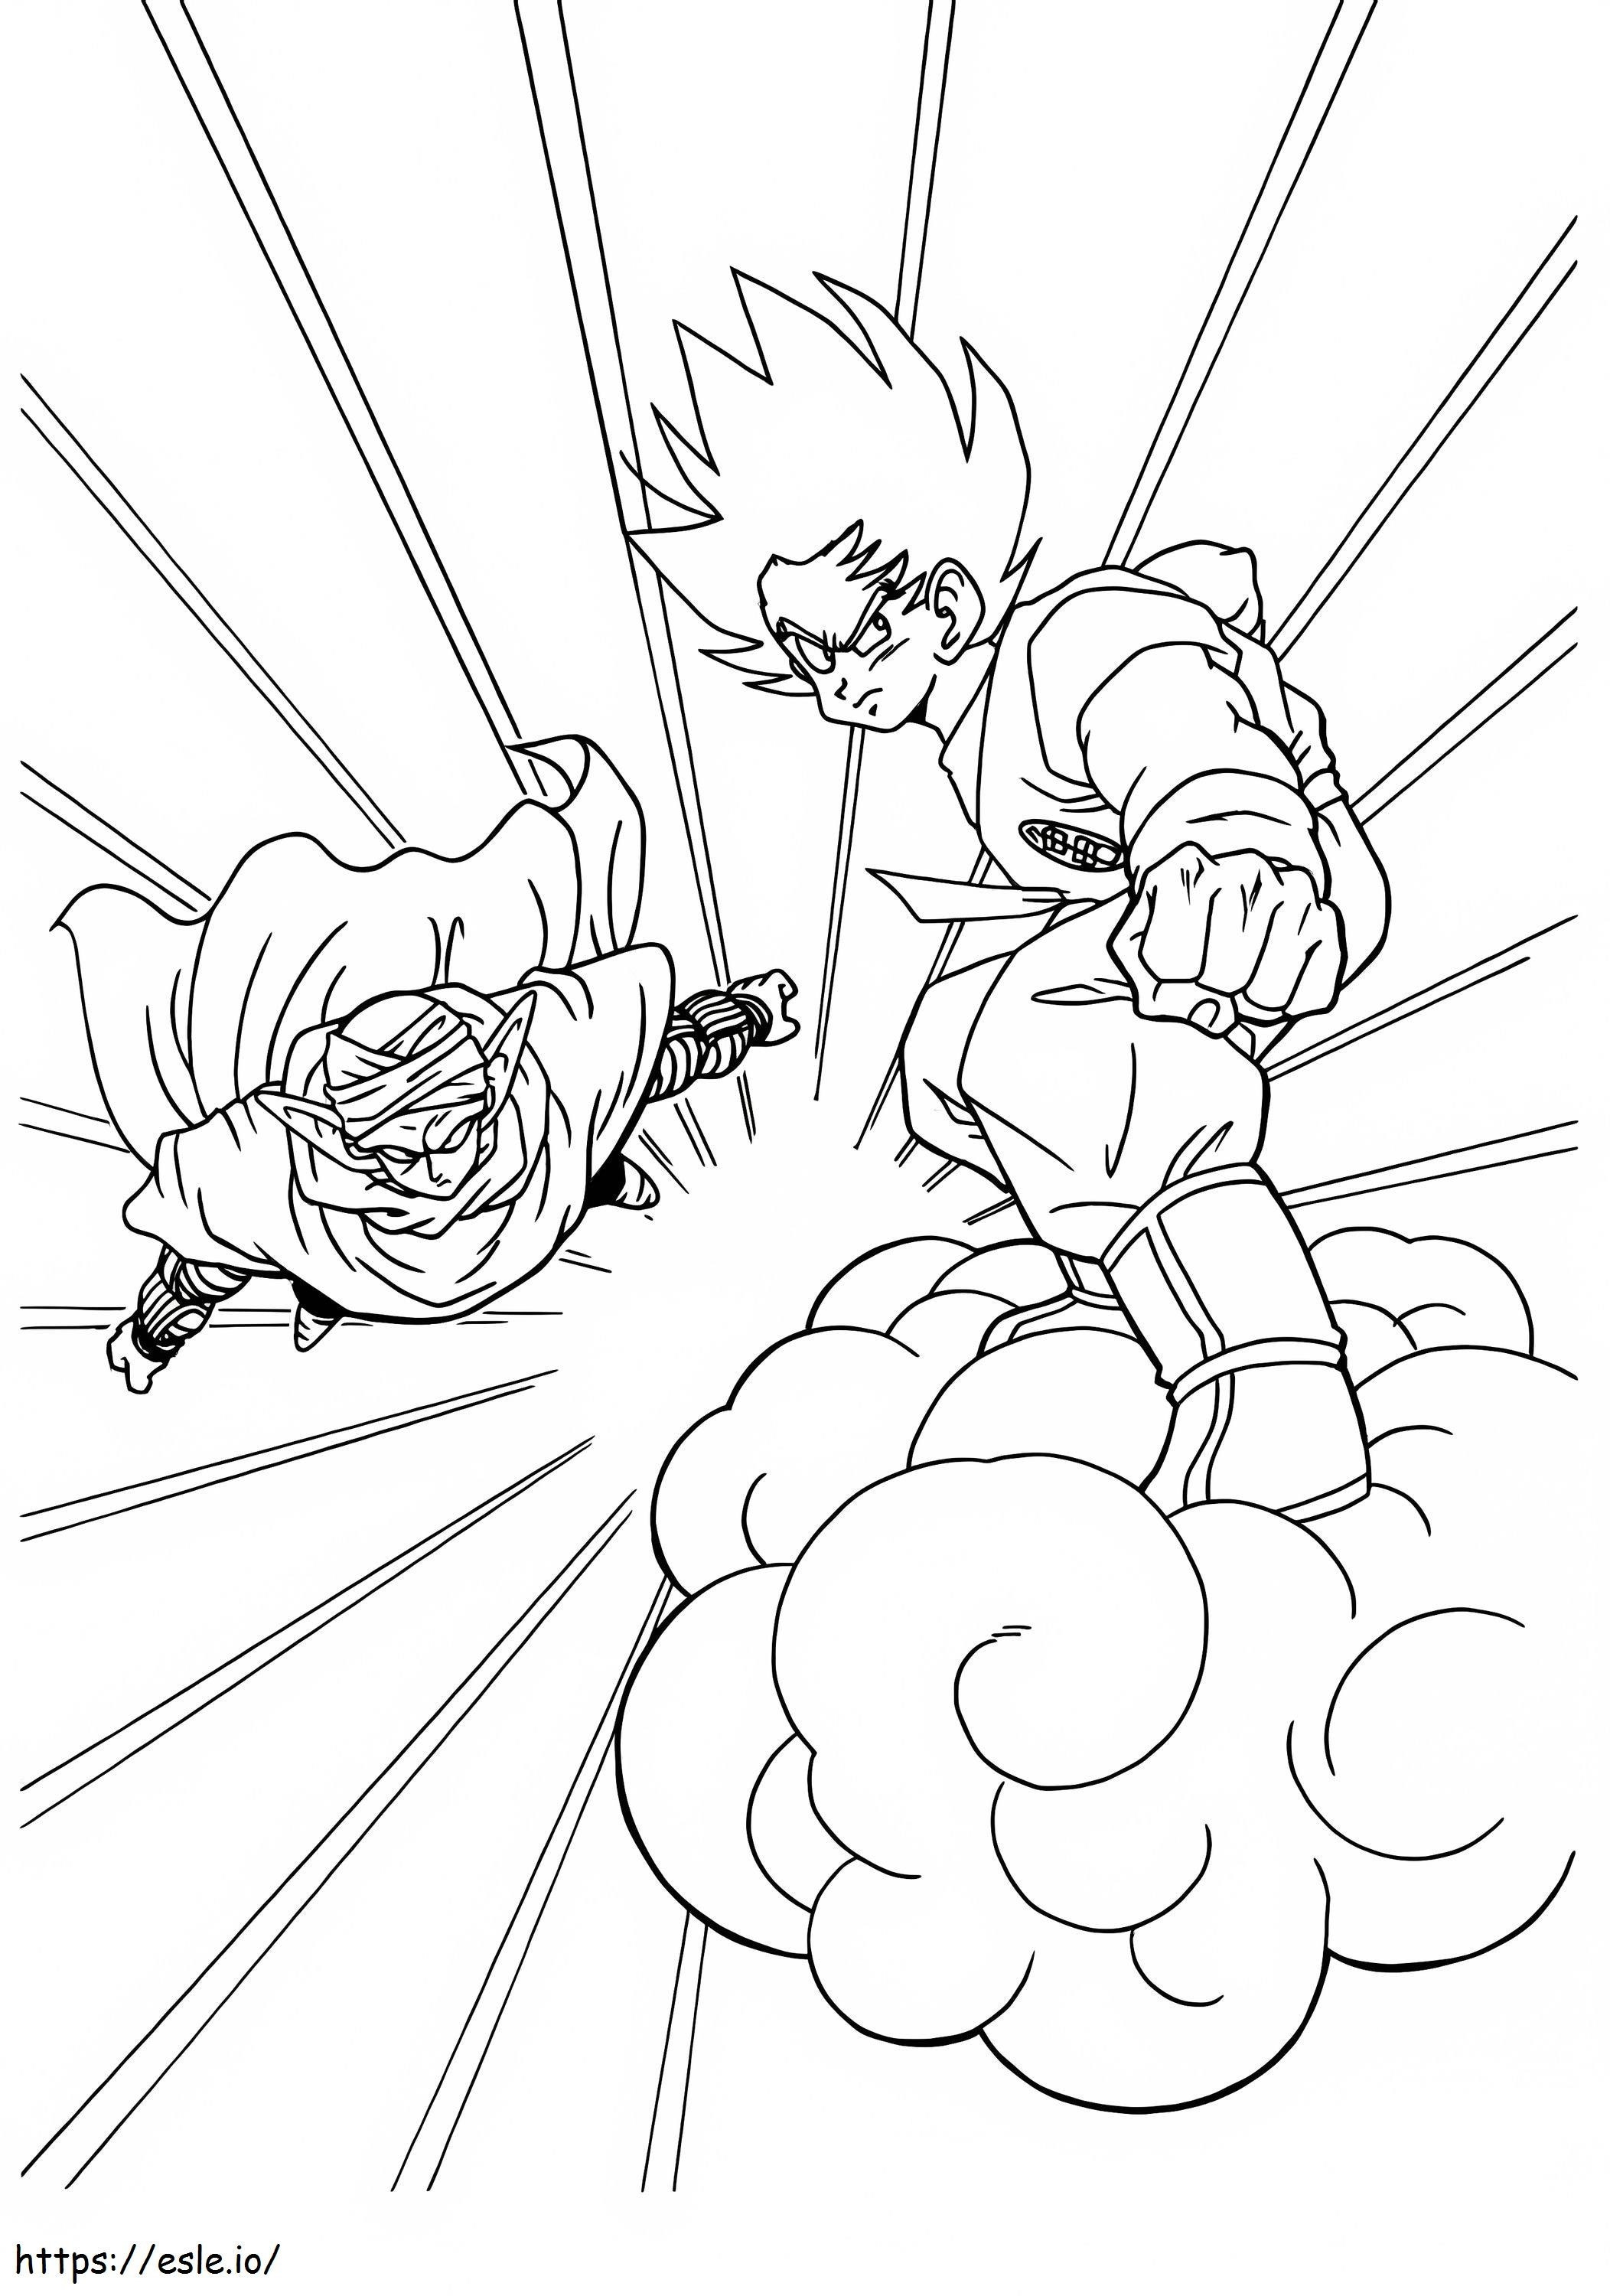 Son Goku și Piccolo de colorat